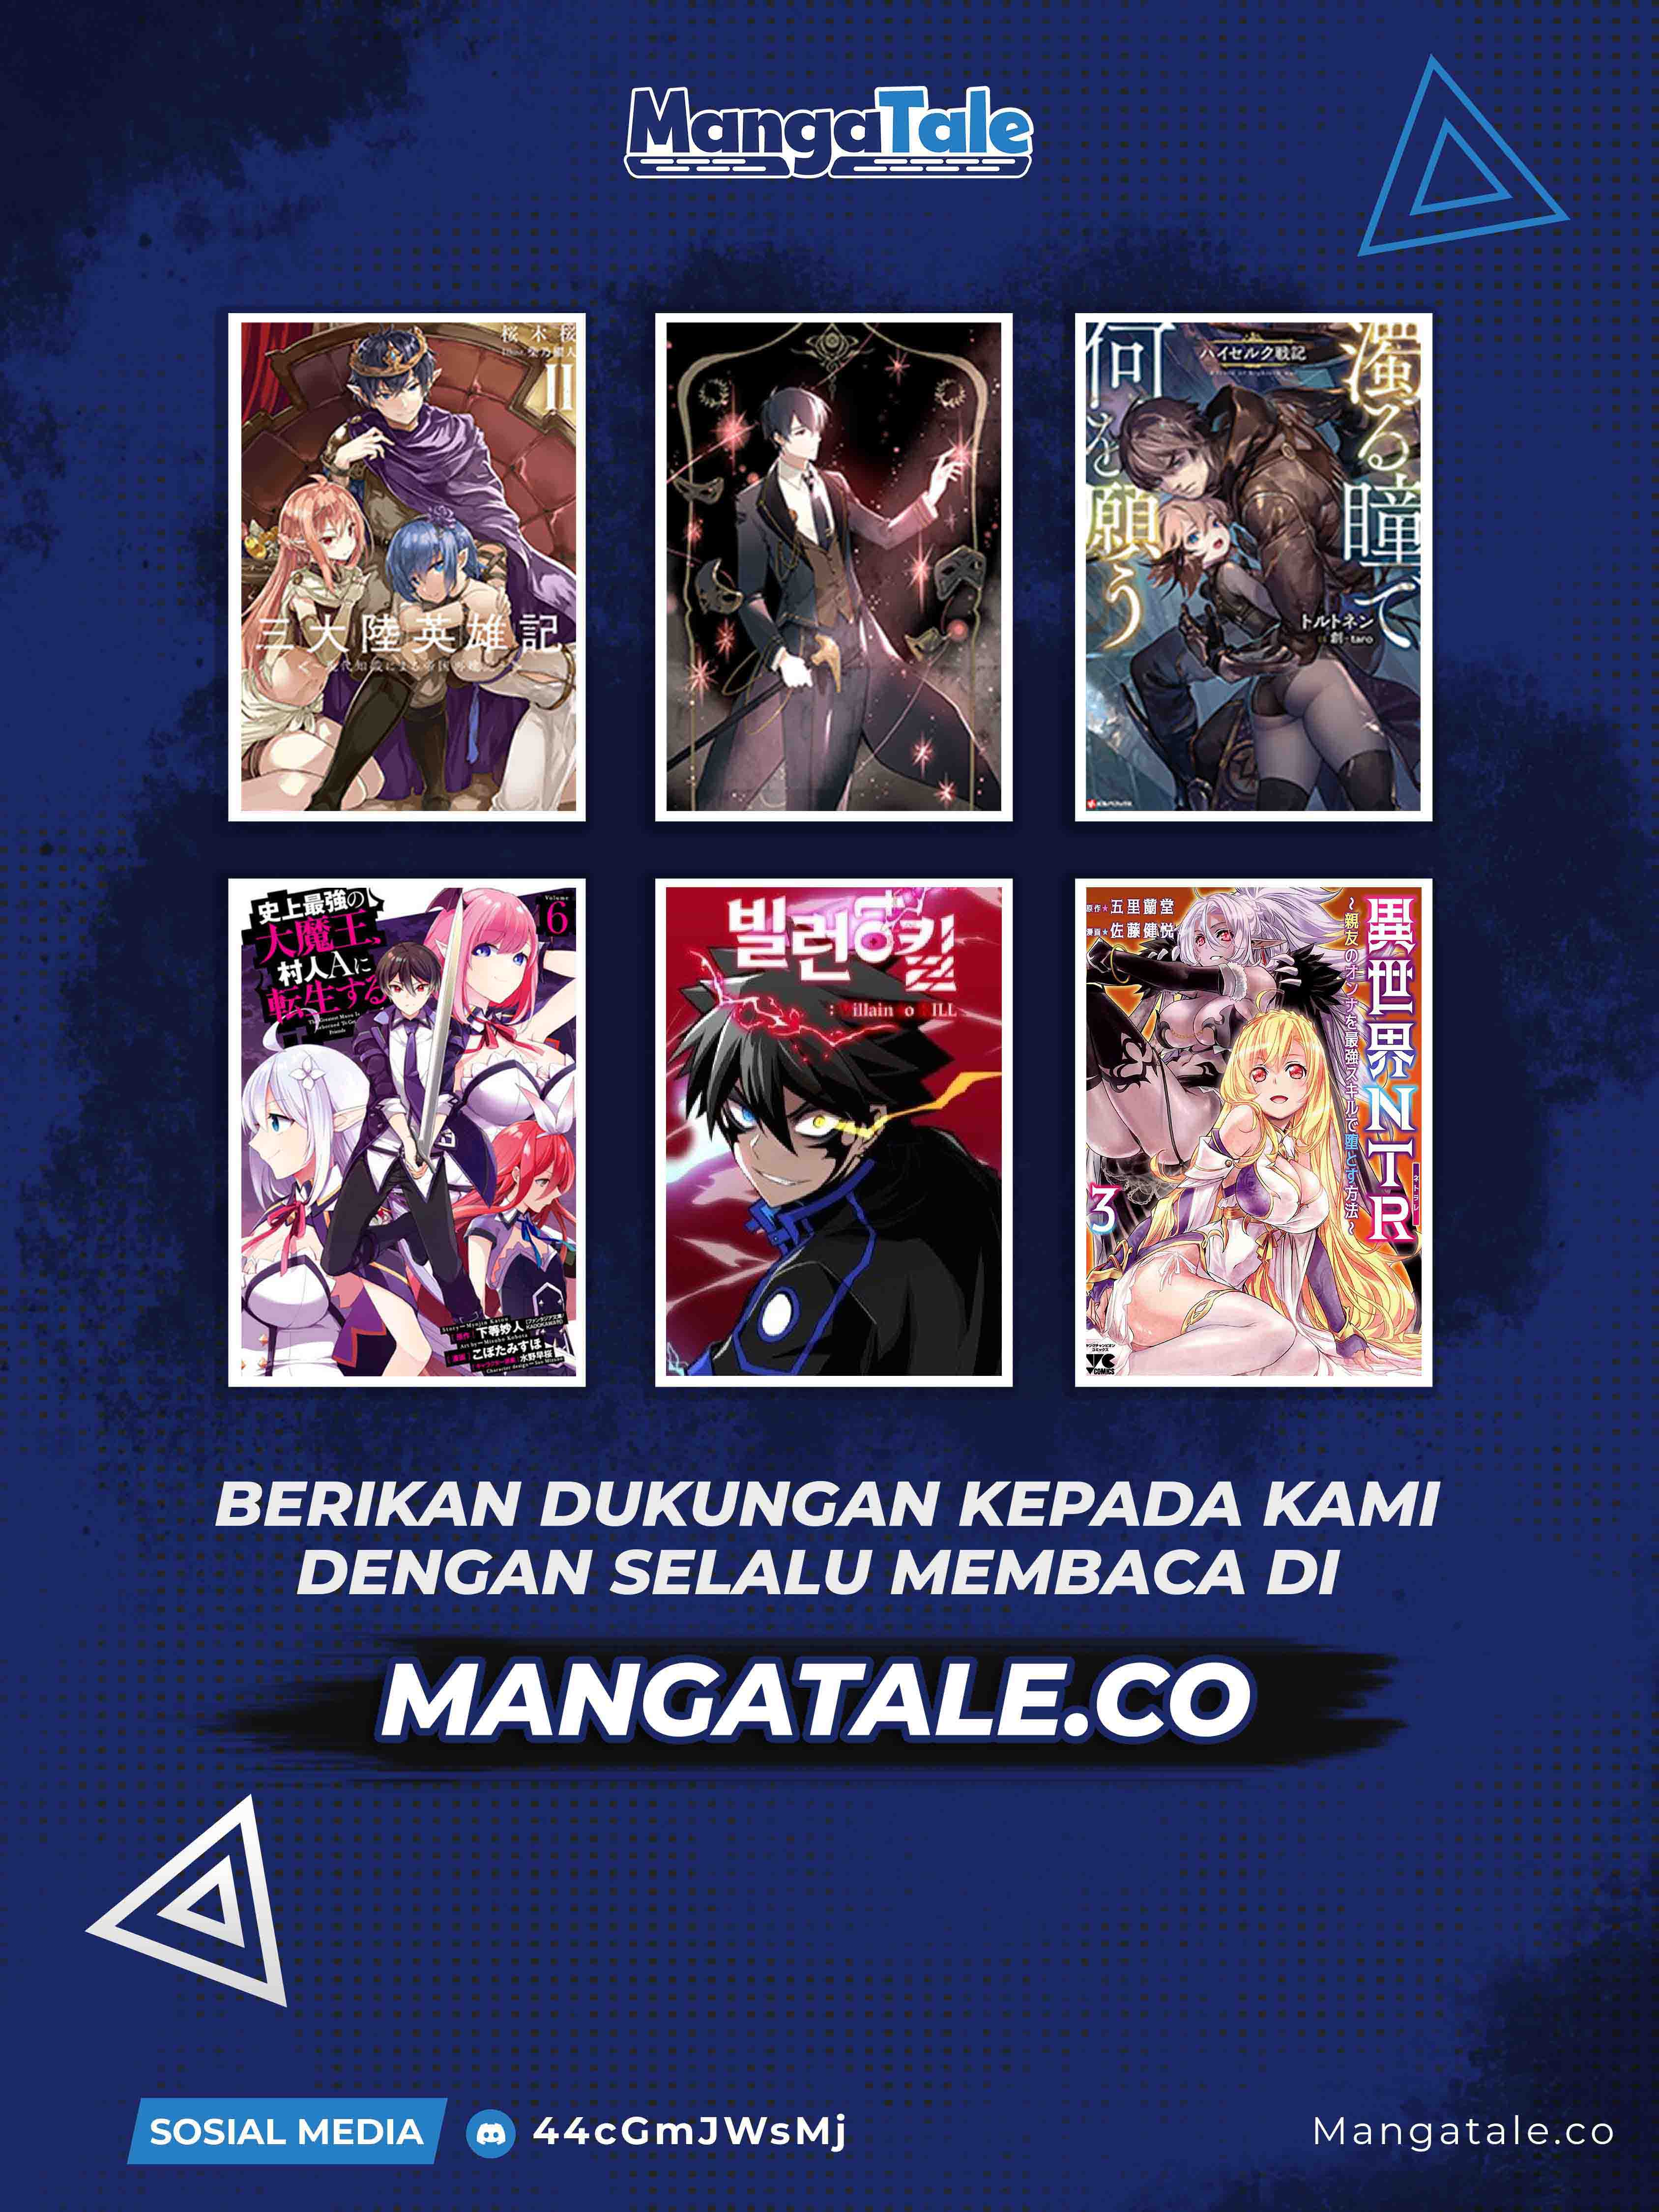 Knights & Magic Chapter 82 Bahasa Indonesia